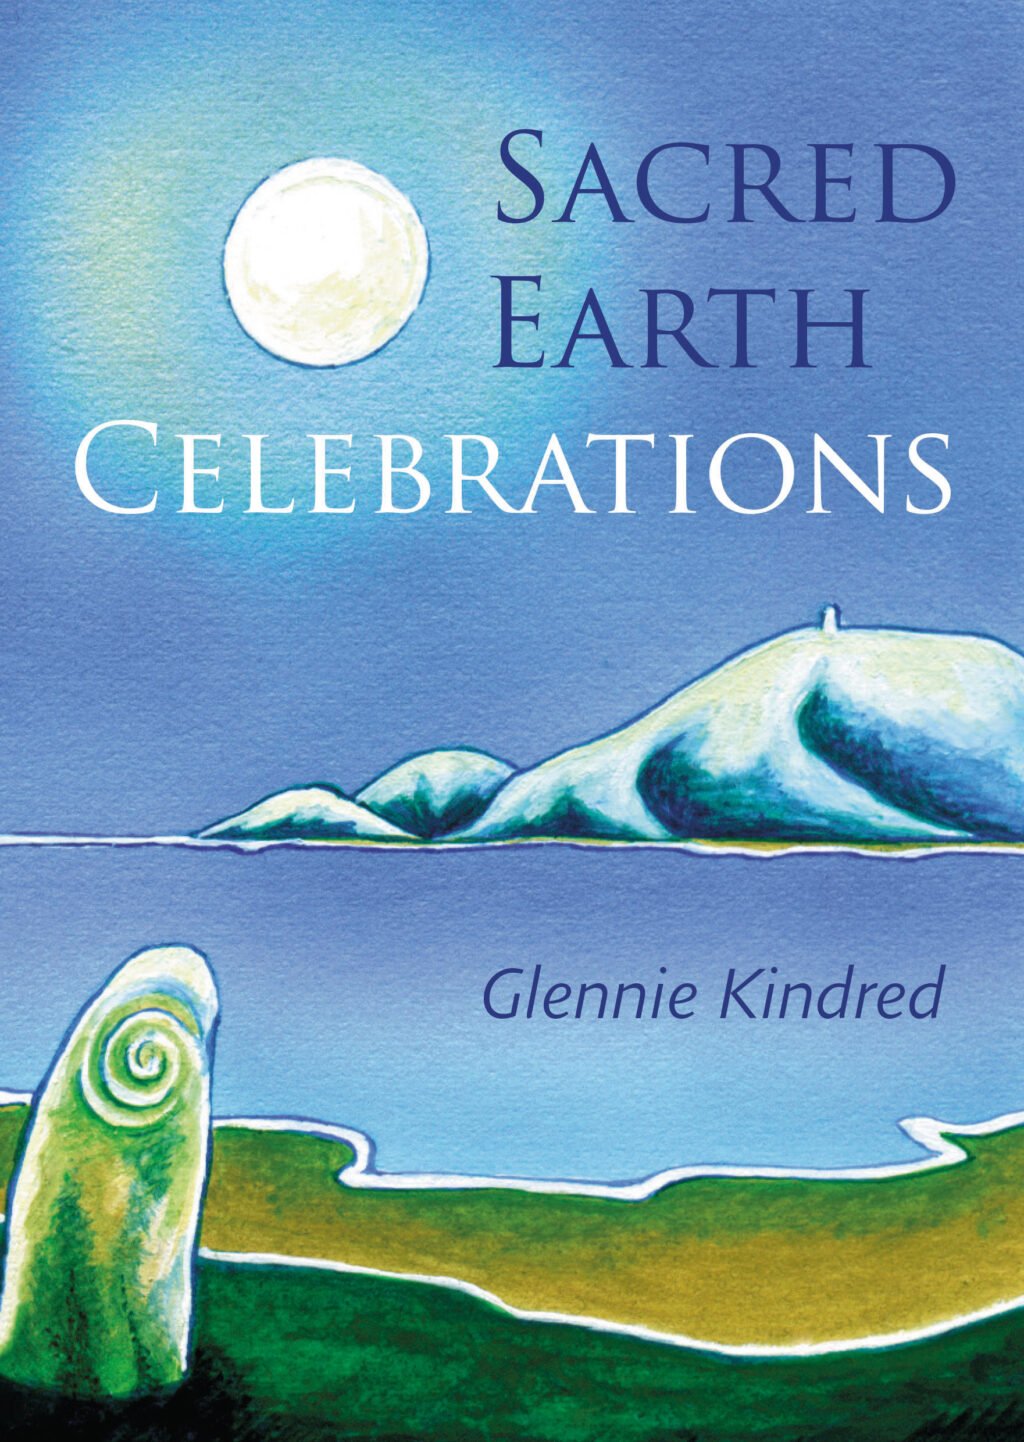 The Sacred Earth Celebrations